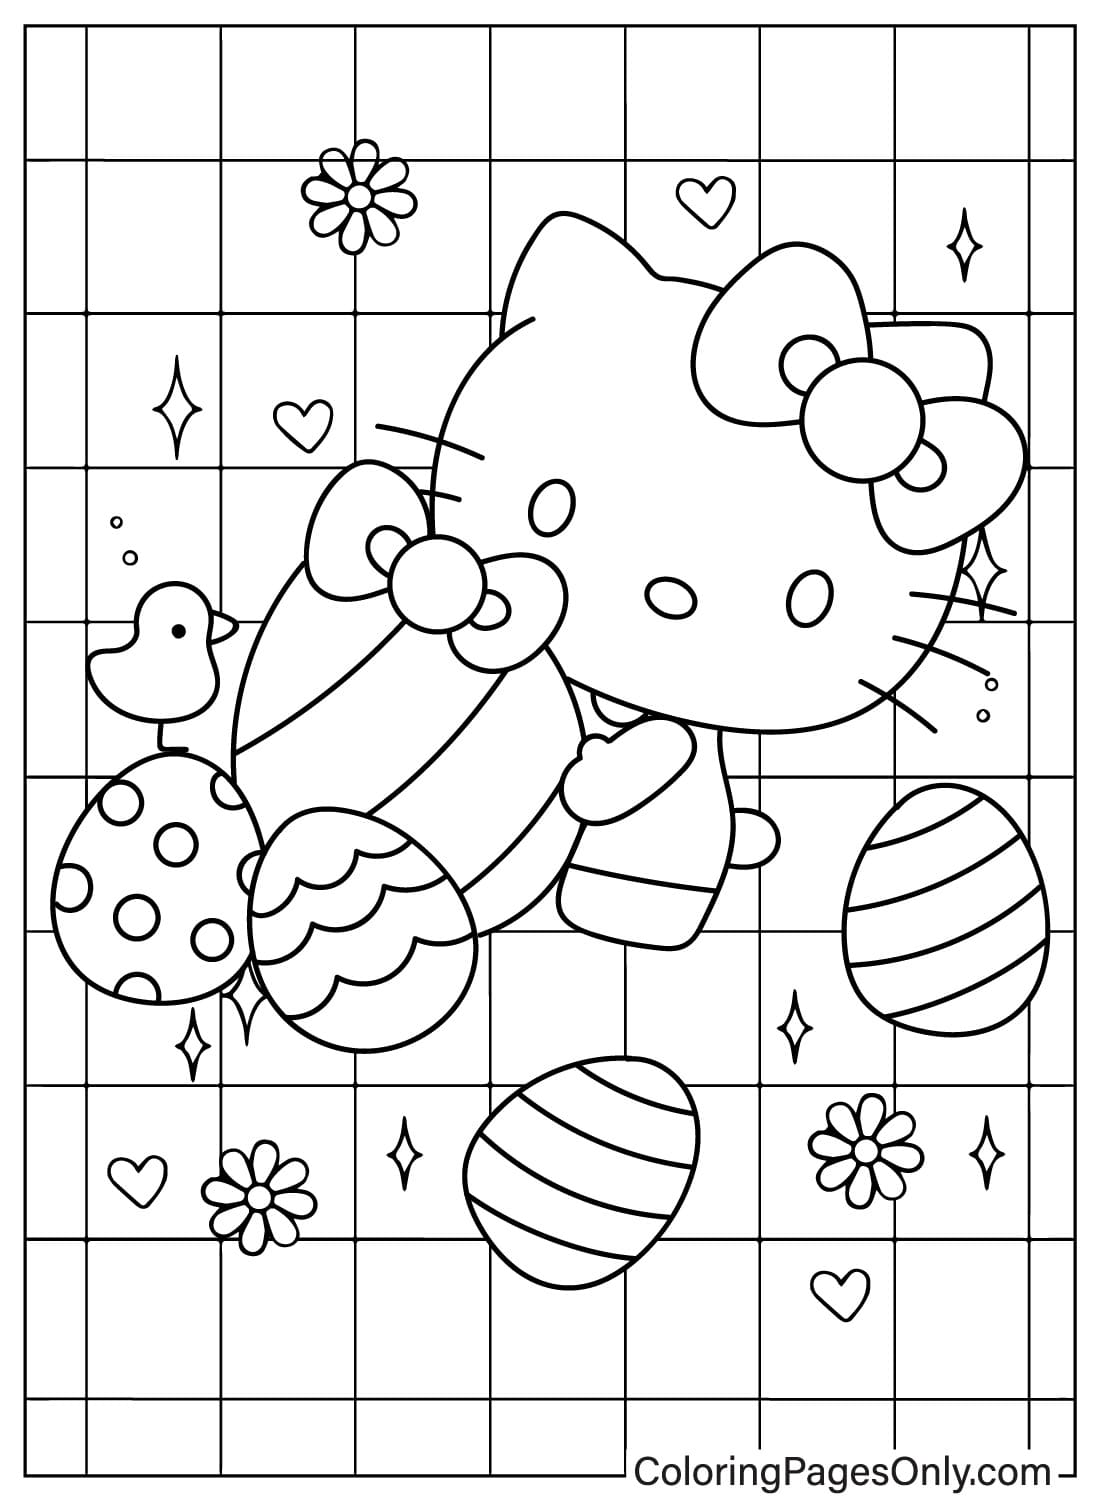 Página para colorir da Hello Kitty da Páscoa grátis no desenho animado da Páscoa